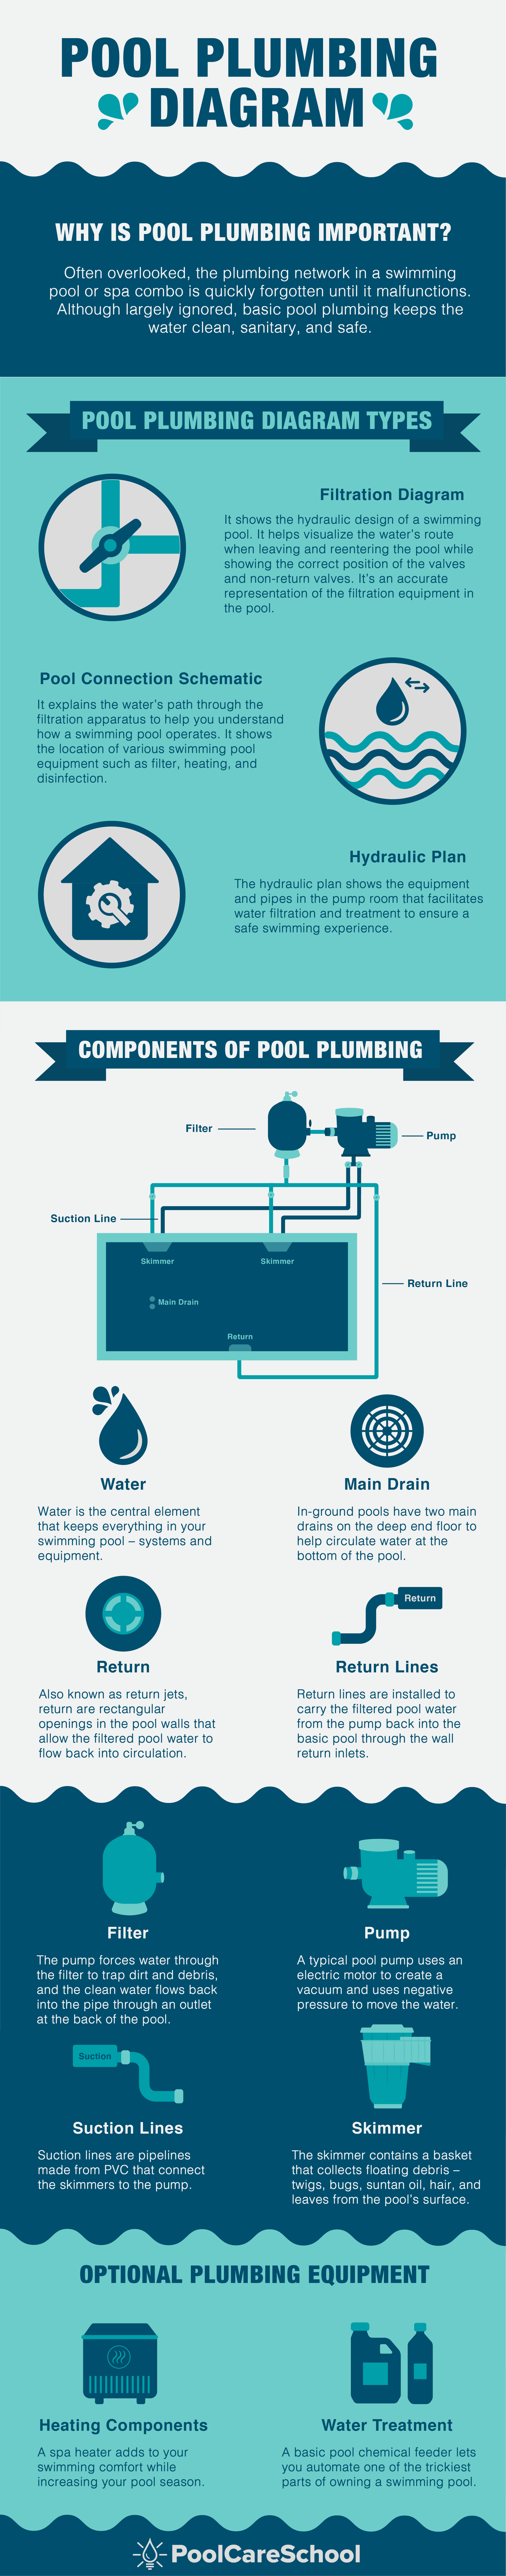 pool plumbing diagram infographic